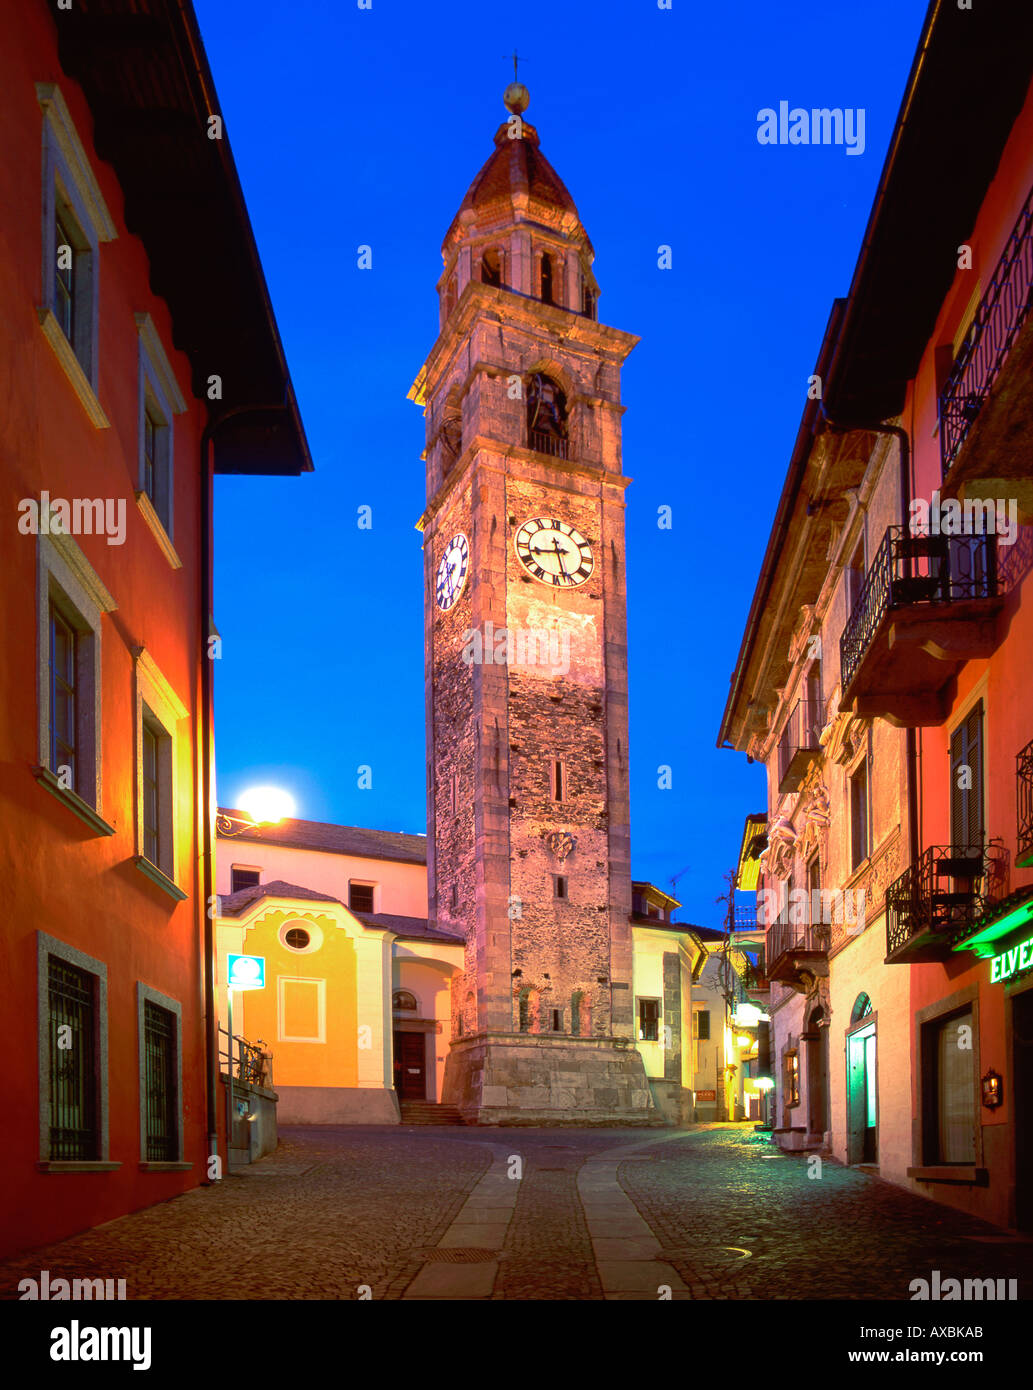 Switzerland Ticino Ascona church clock tower dusk Stock Photo